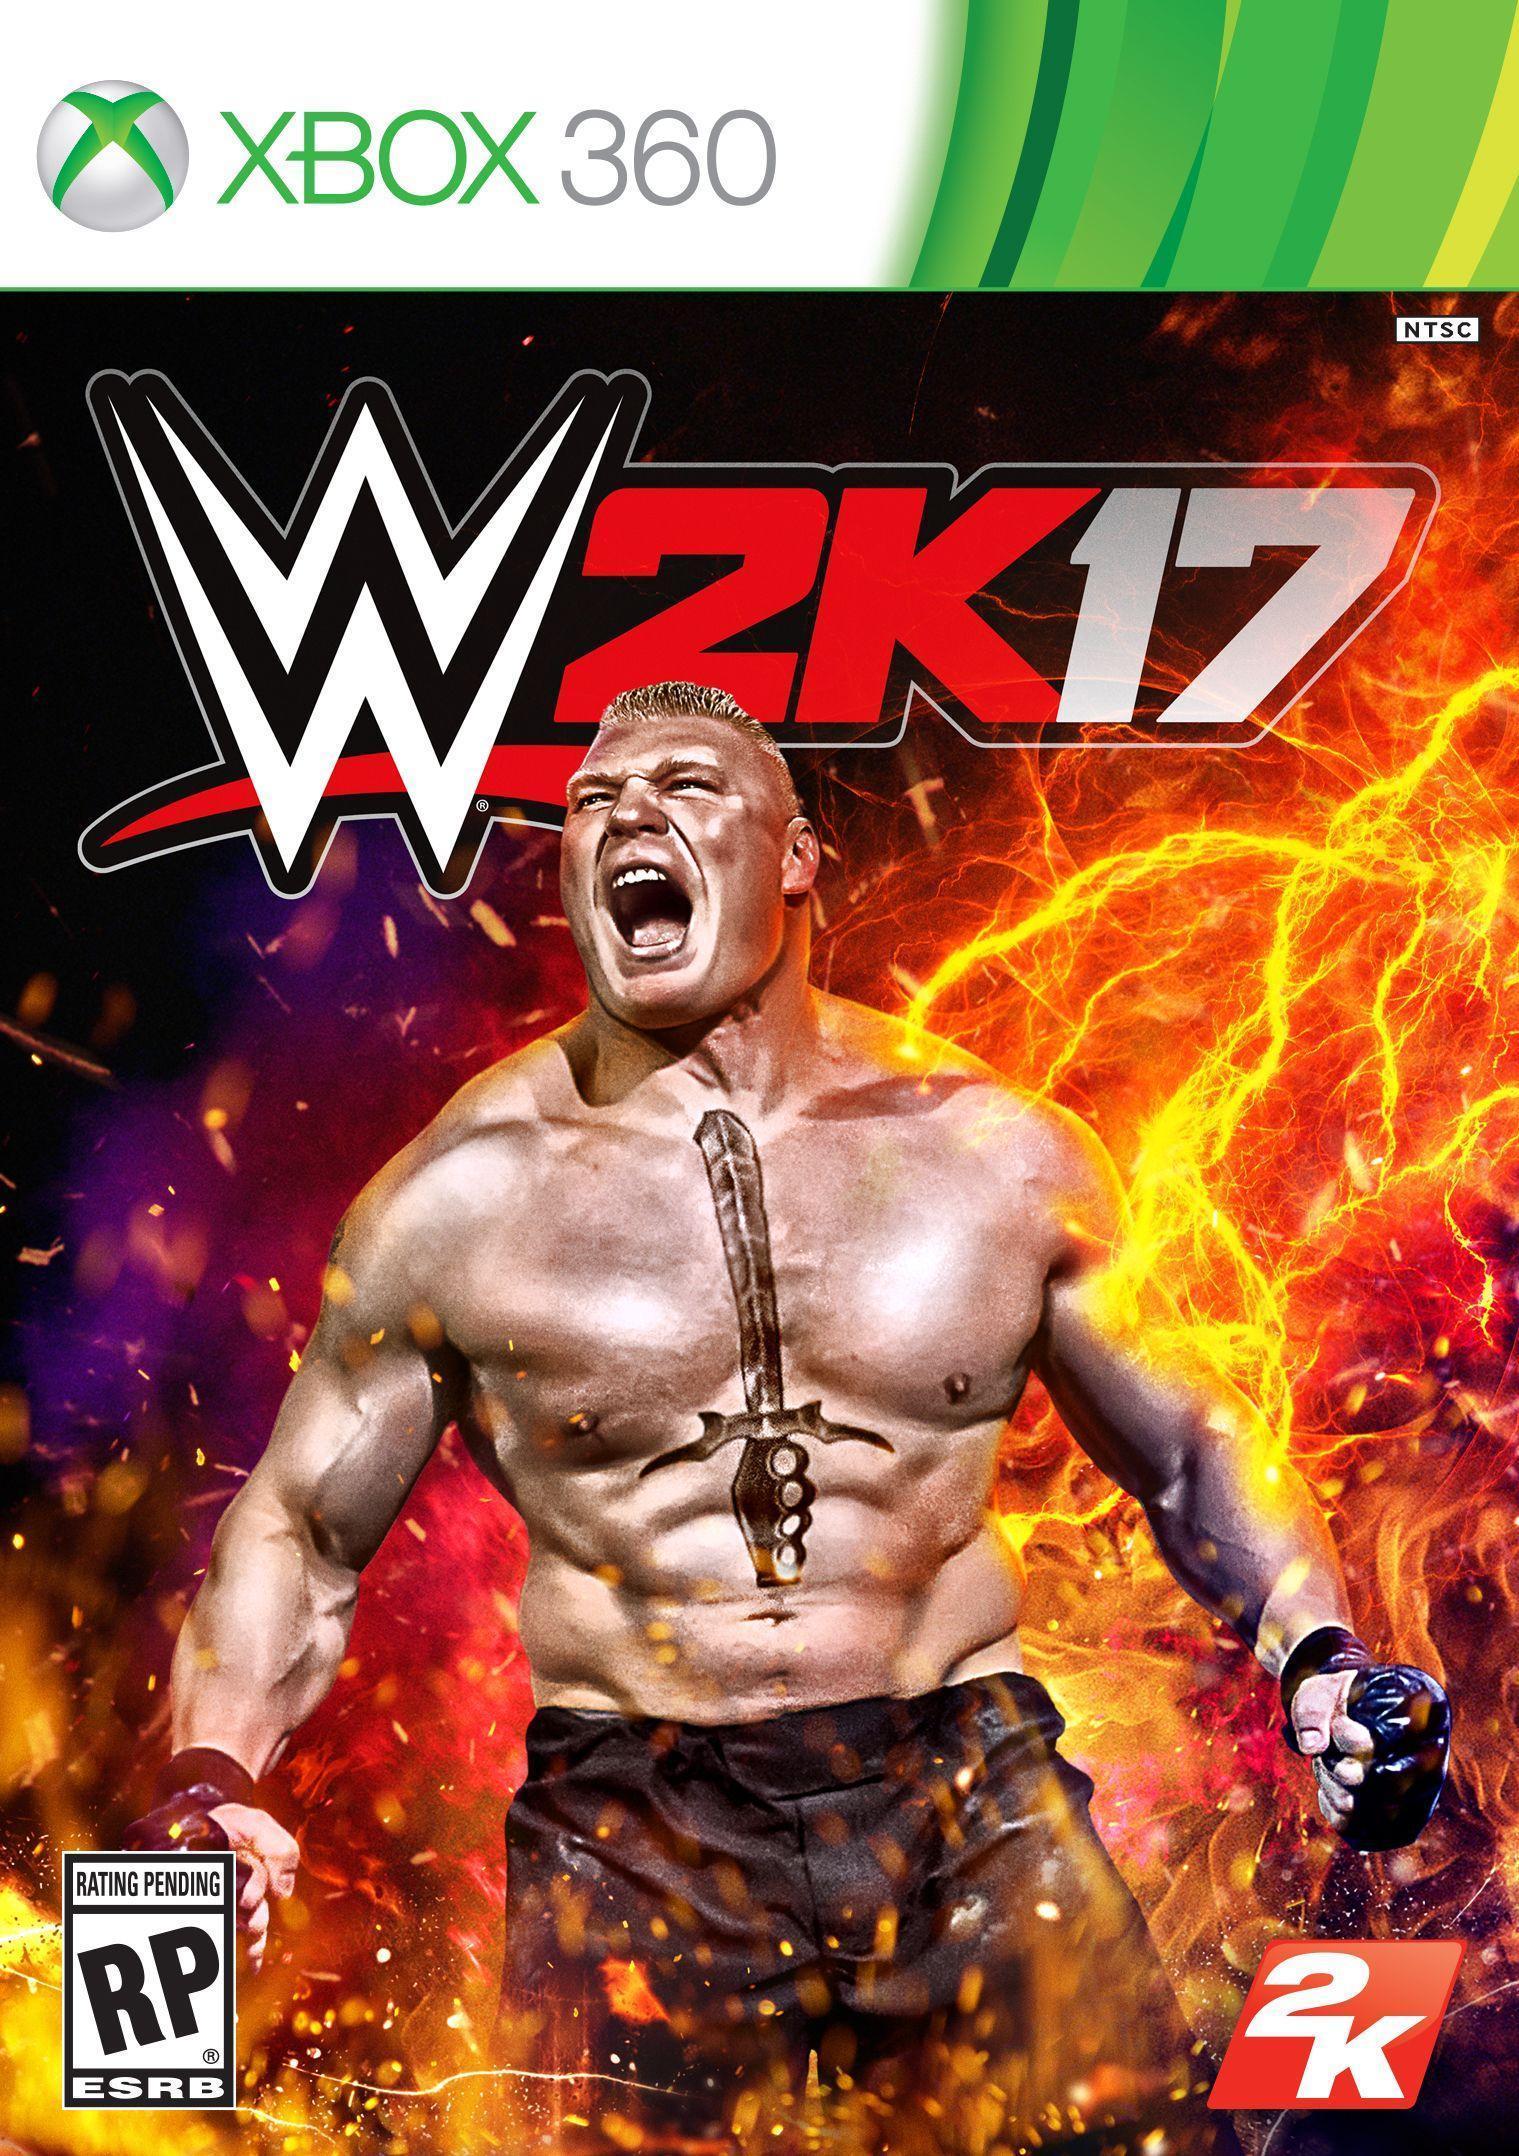 WATCH: Official Brock Lesnar WWE 2K17 Video Game Trailer